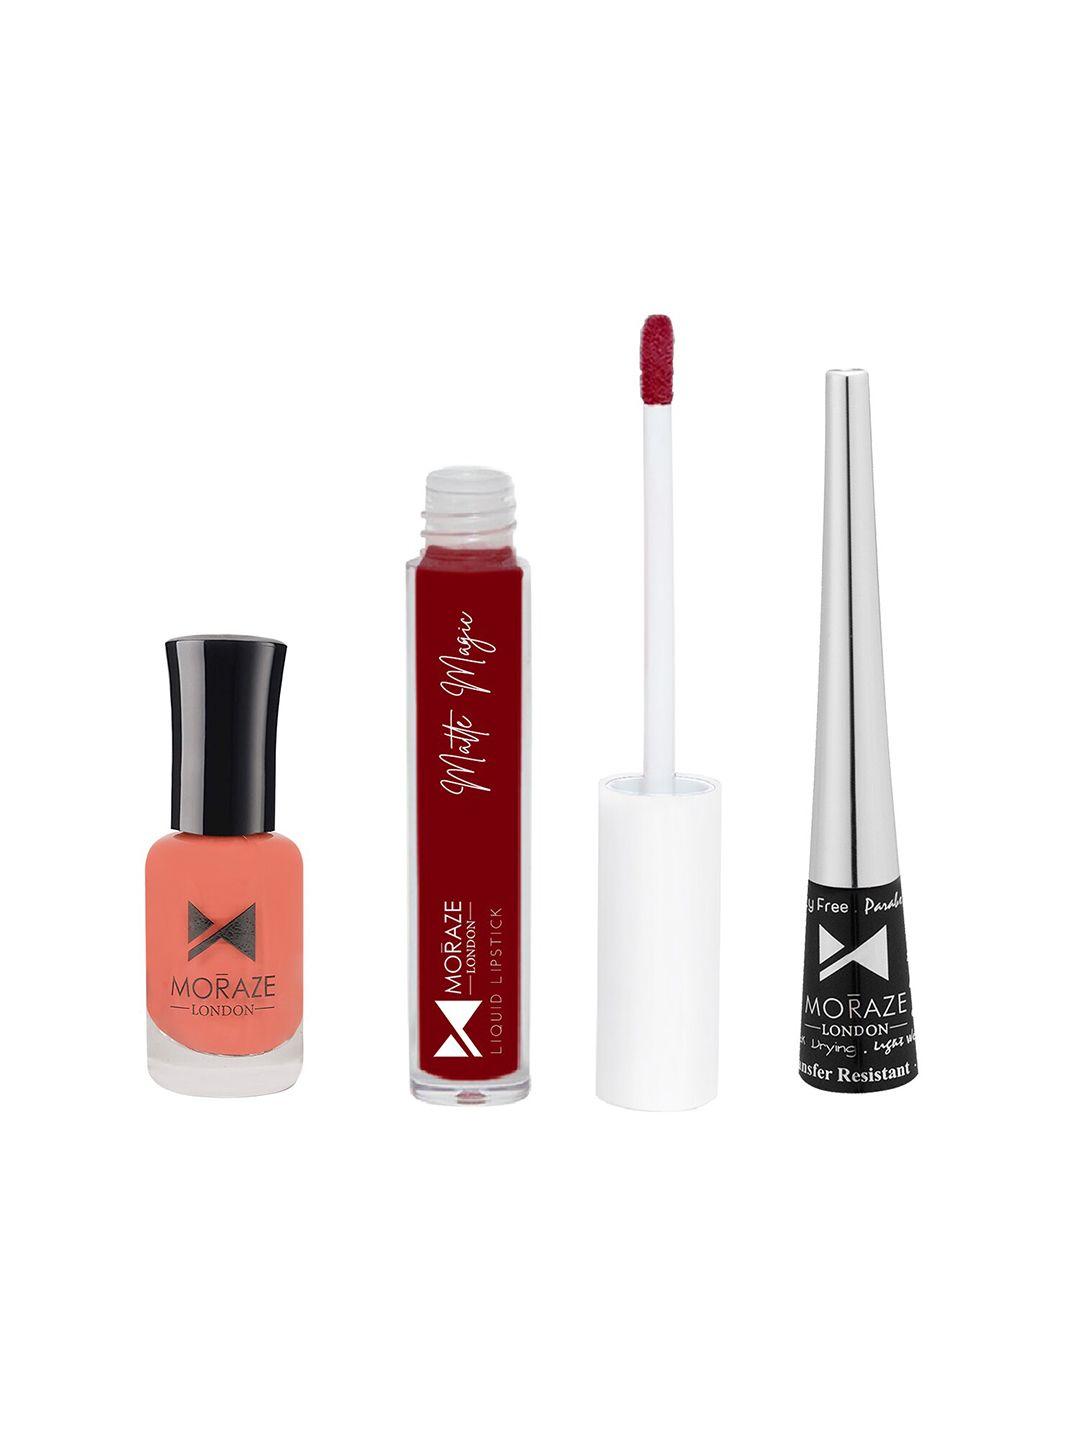 moraze pack of 1 nude nail polish (tootsi) with 1 lipstick (angle) and 1 eyeliner